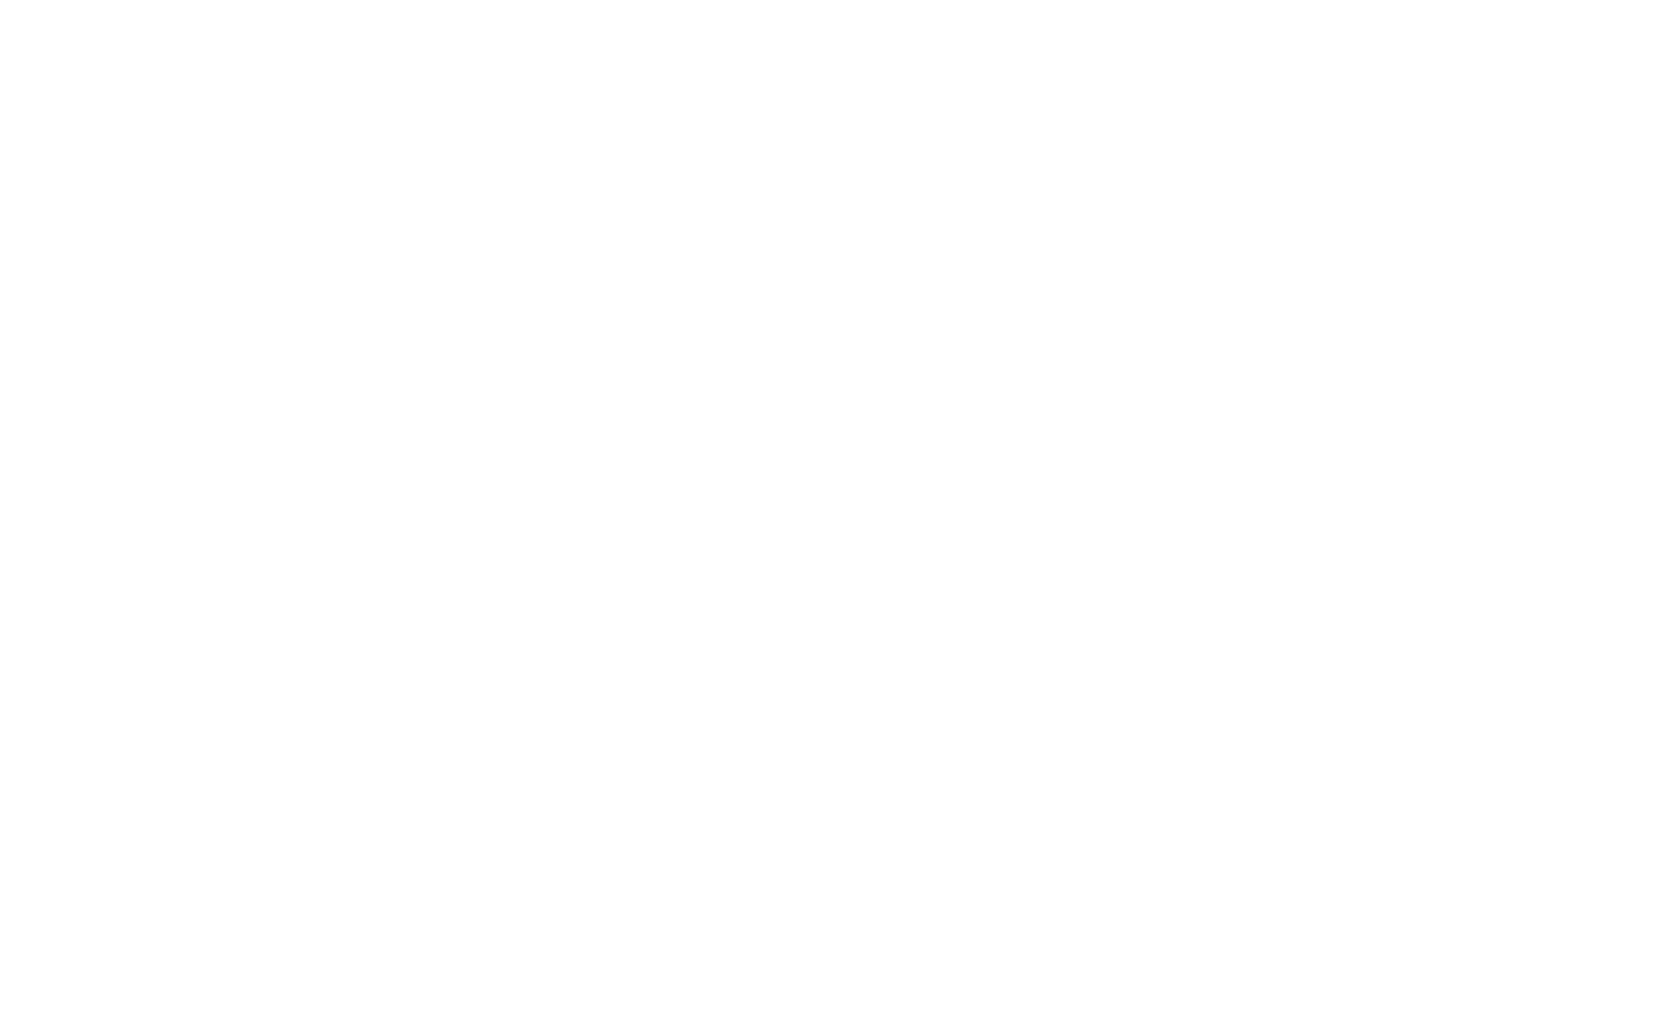 Amarillo Meals on Wheels